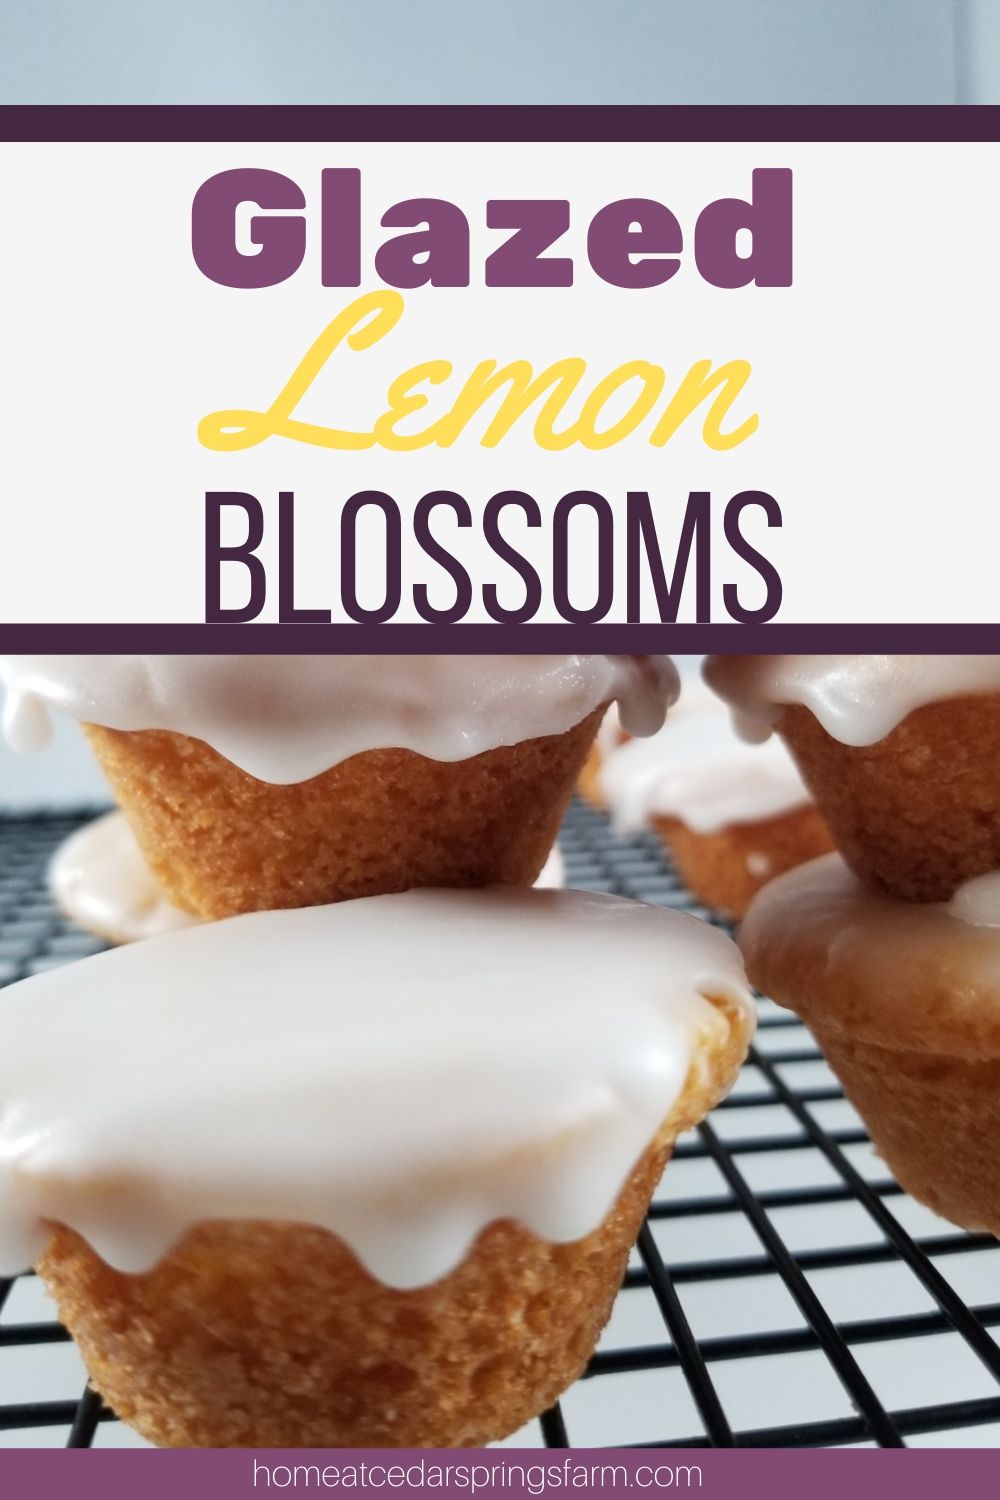 Glazed Lemon Blossom Cakes with text overlay.